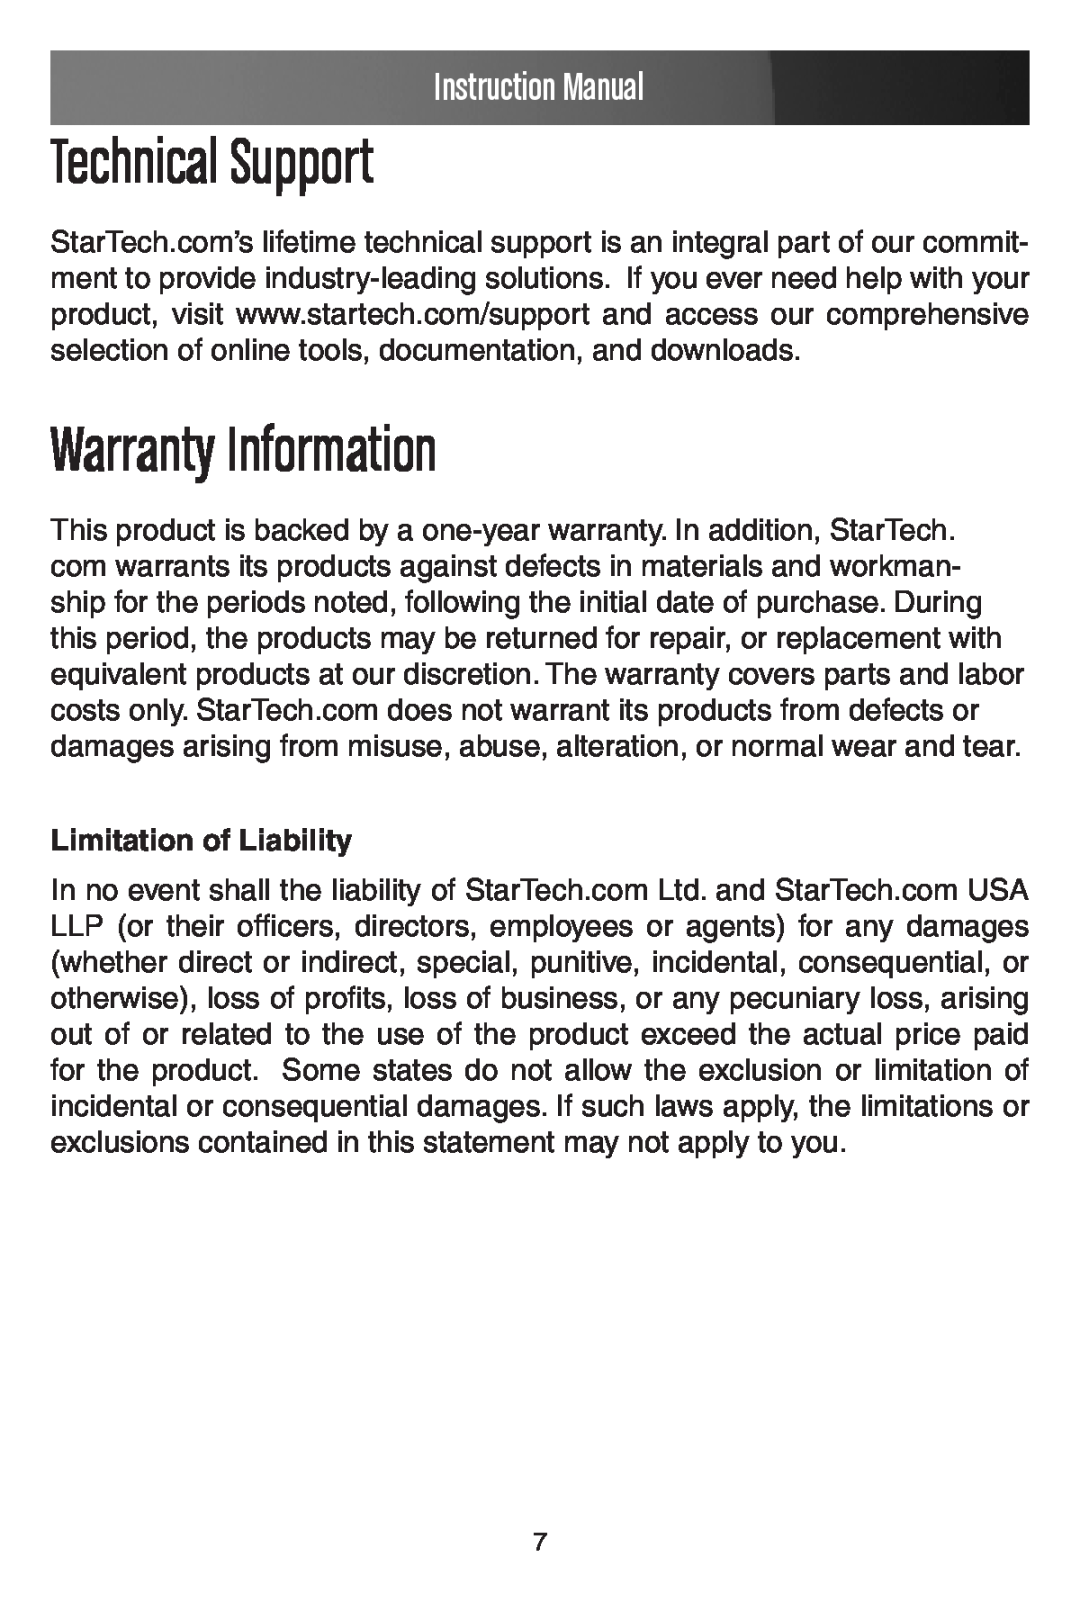 StarTech.com PEX2EC35 manual Technical Support, Warranty Information, Instruction Manual, Limitation of Liability 